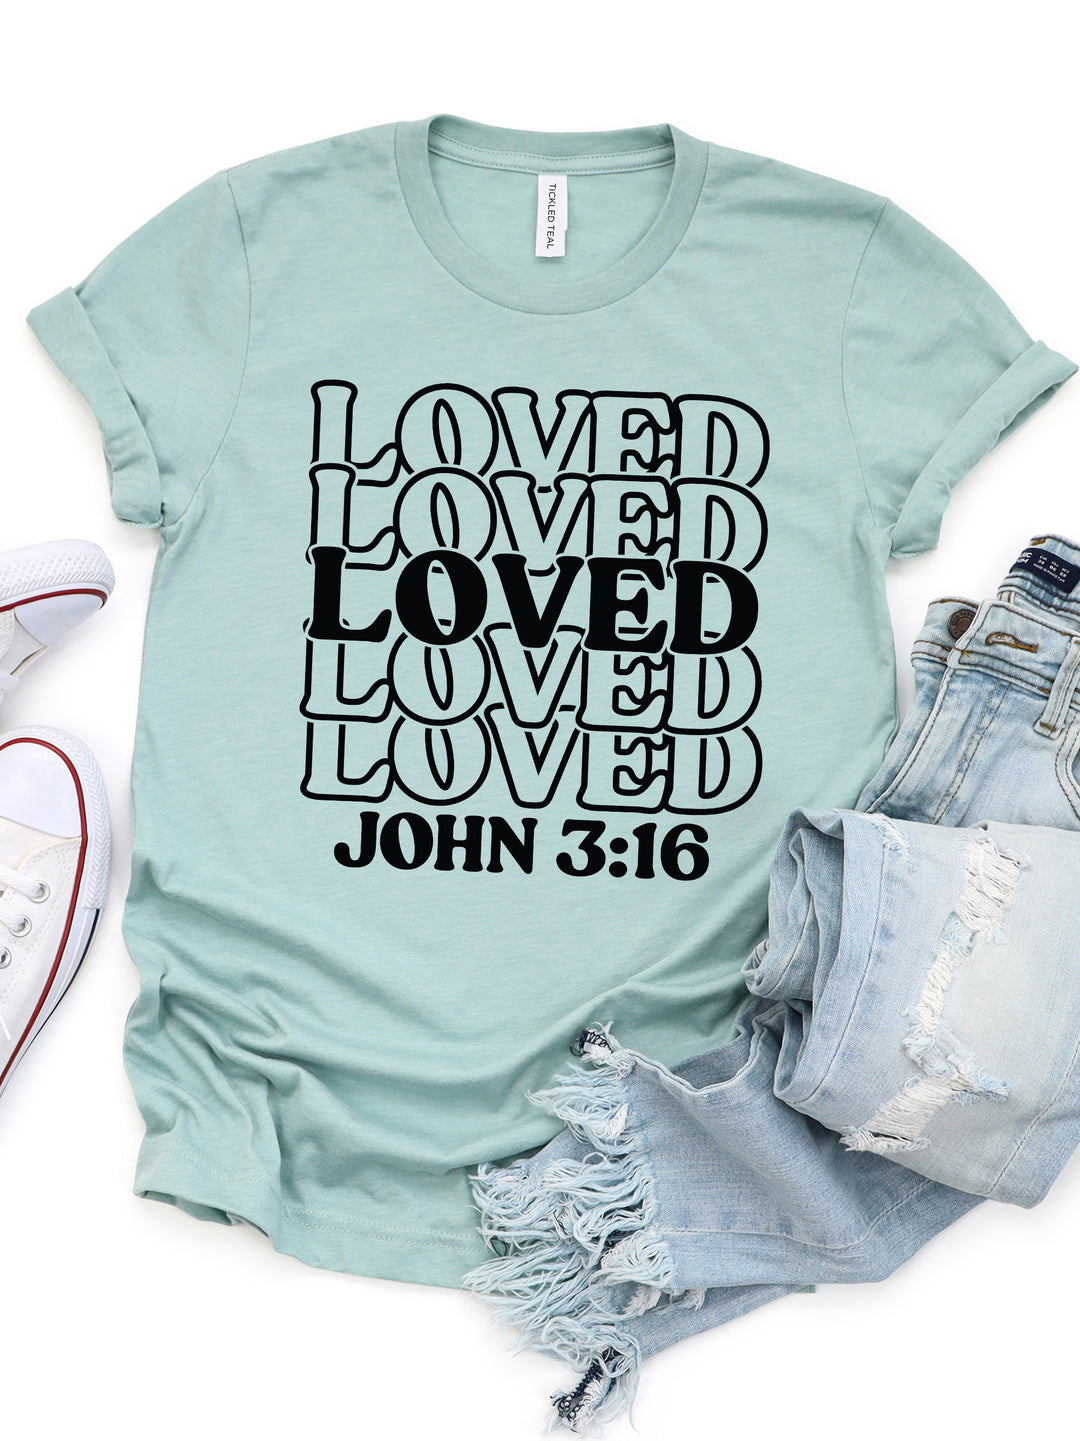 Loved John 3:16 Graphic Tee